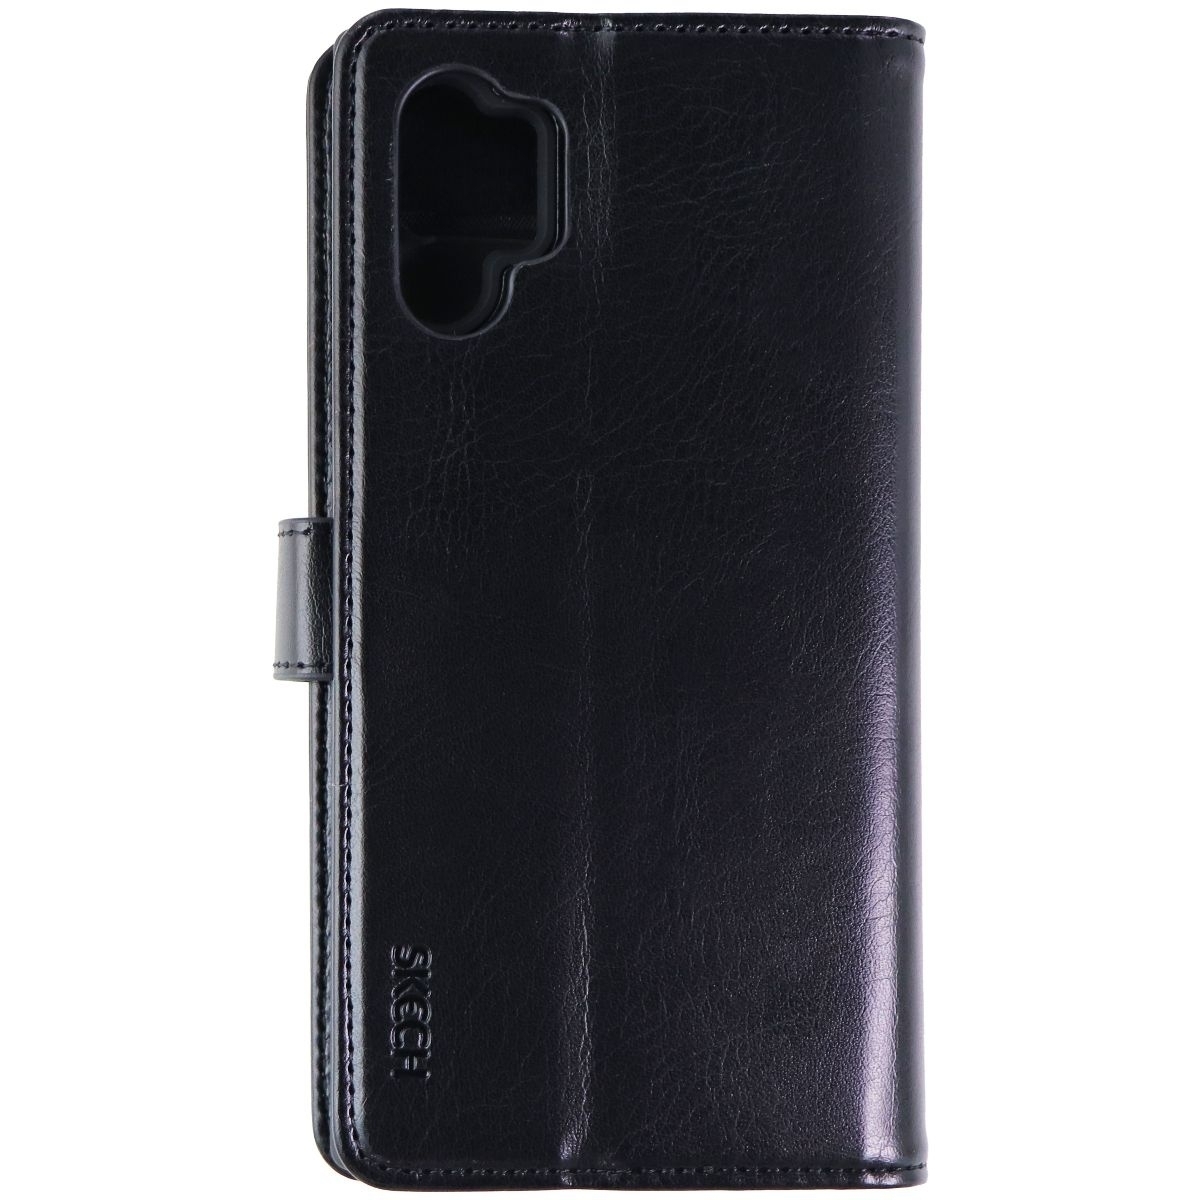 Skech Polo Book Wallet Case For Samsung Galaxy Note10+ (Plus) - Black